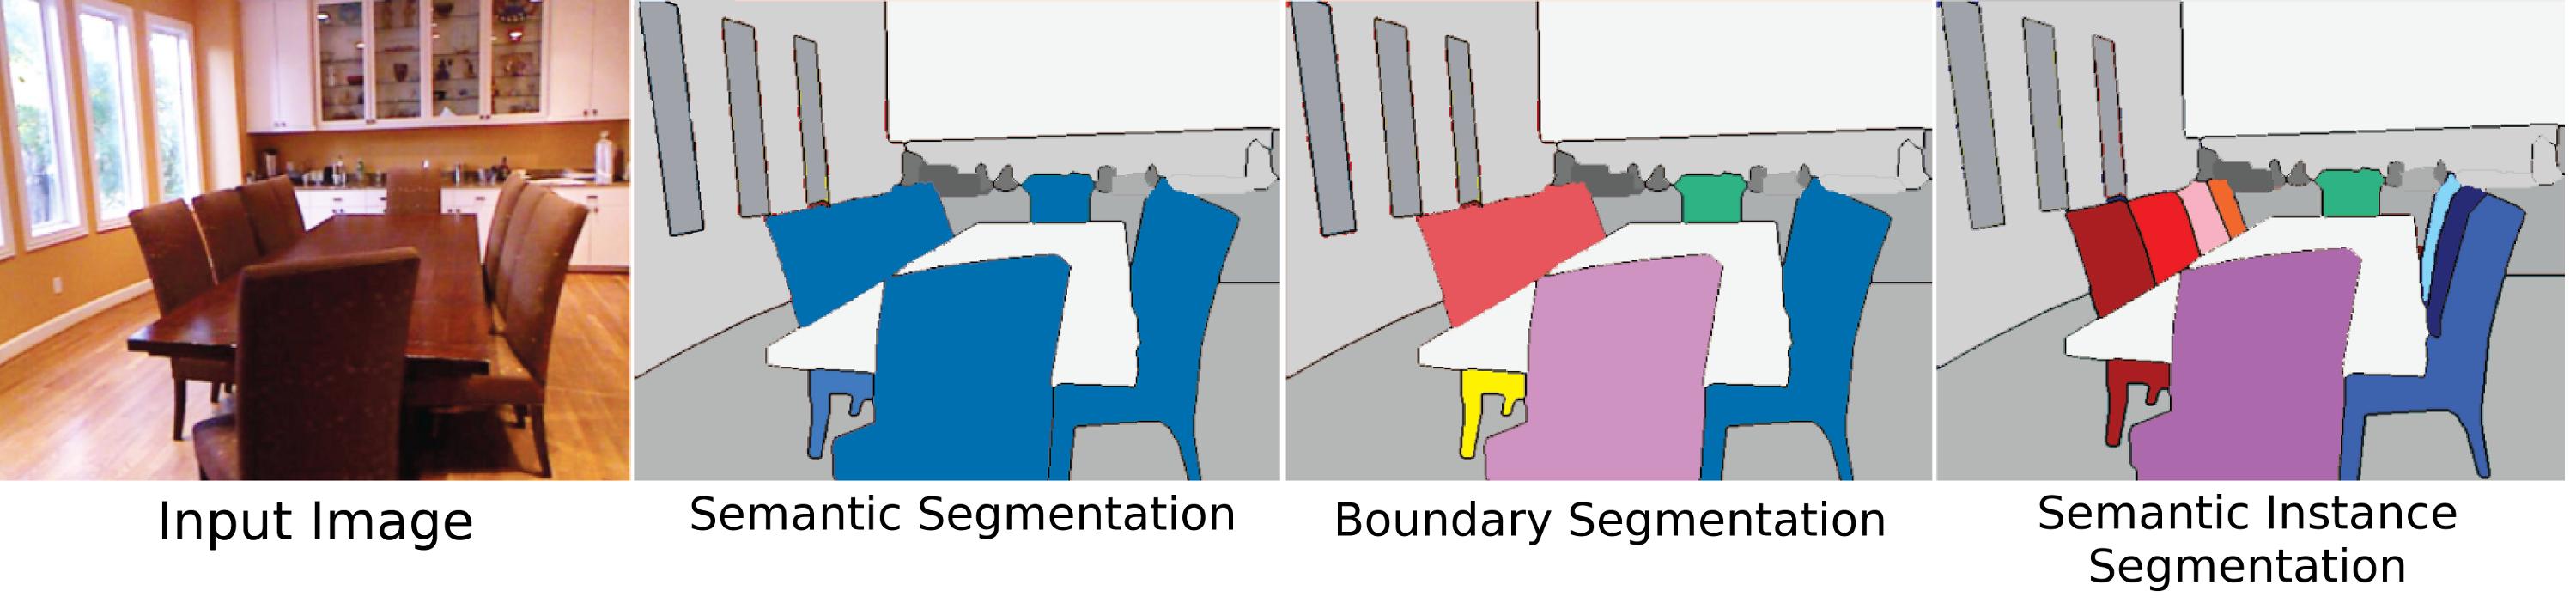 Semantic Segmentation Example